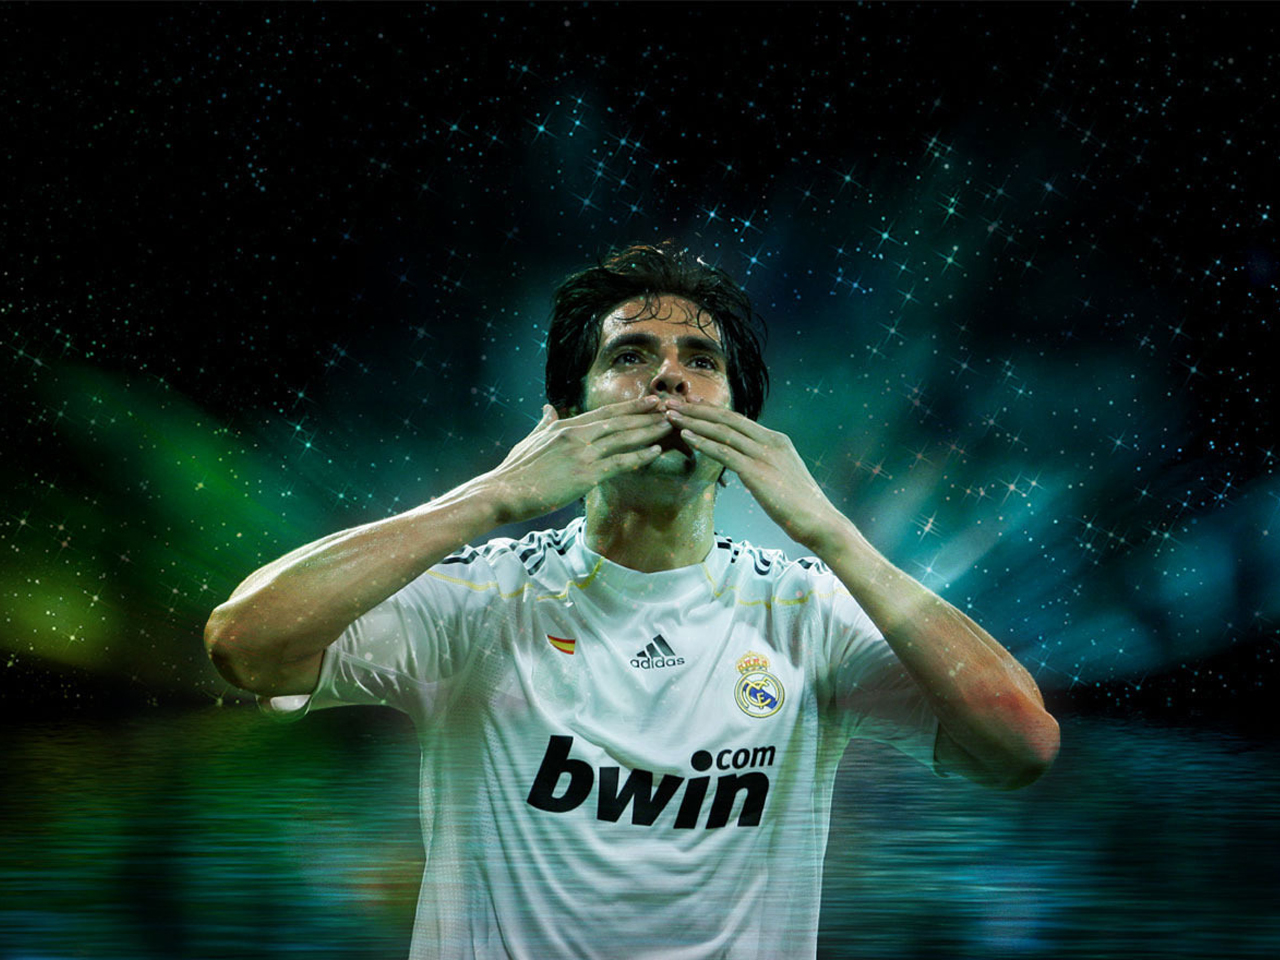 Top Footballer Wallpaper Ricardo Kaka Real Madrid